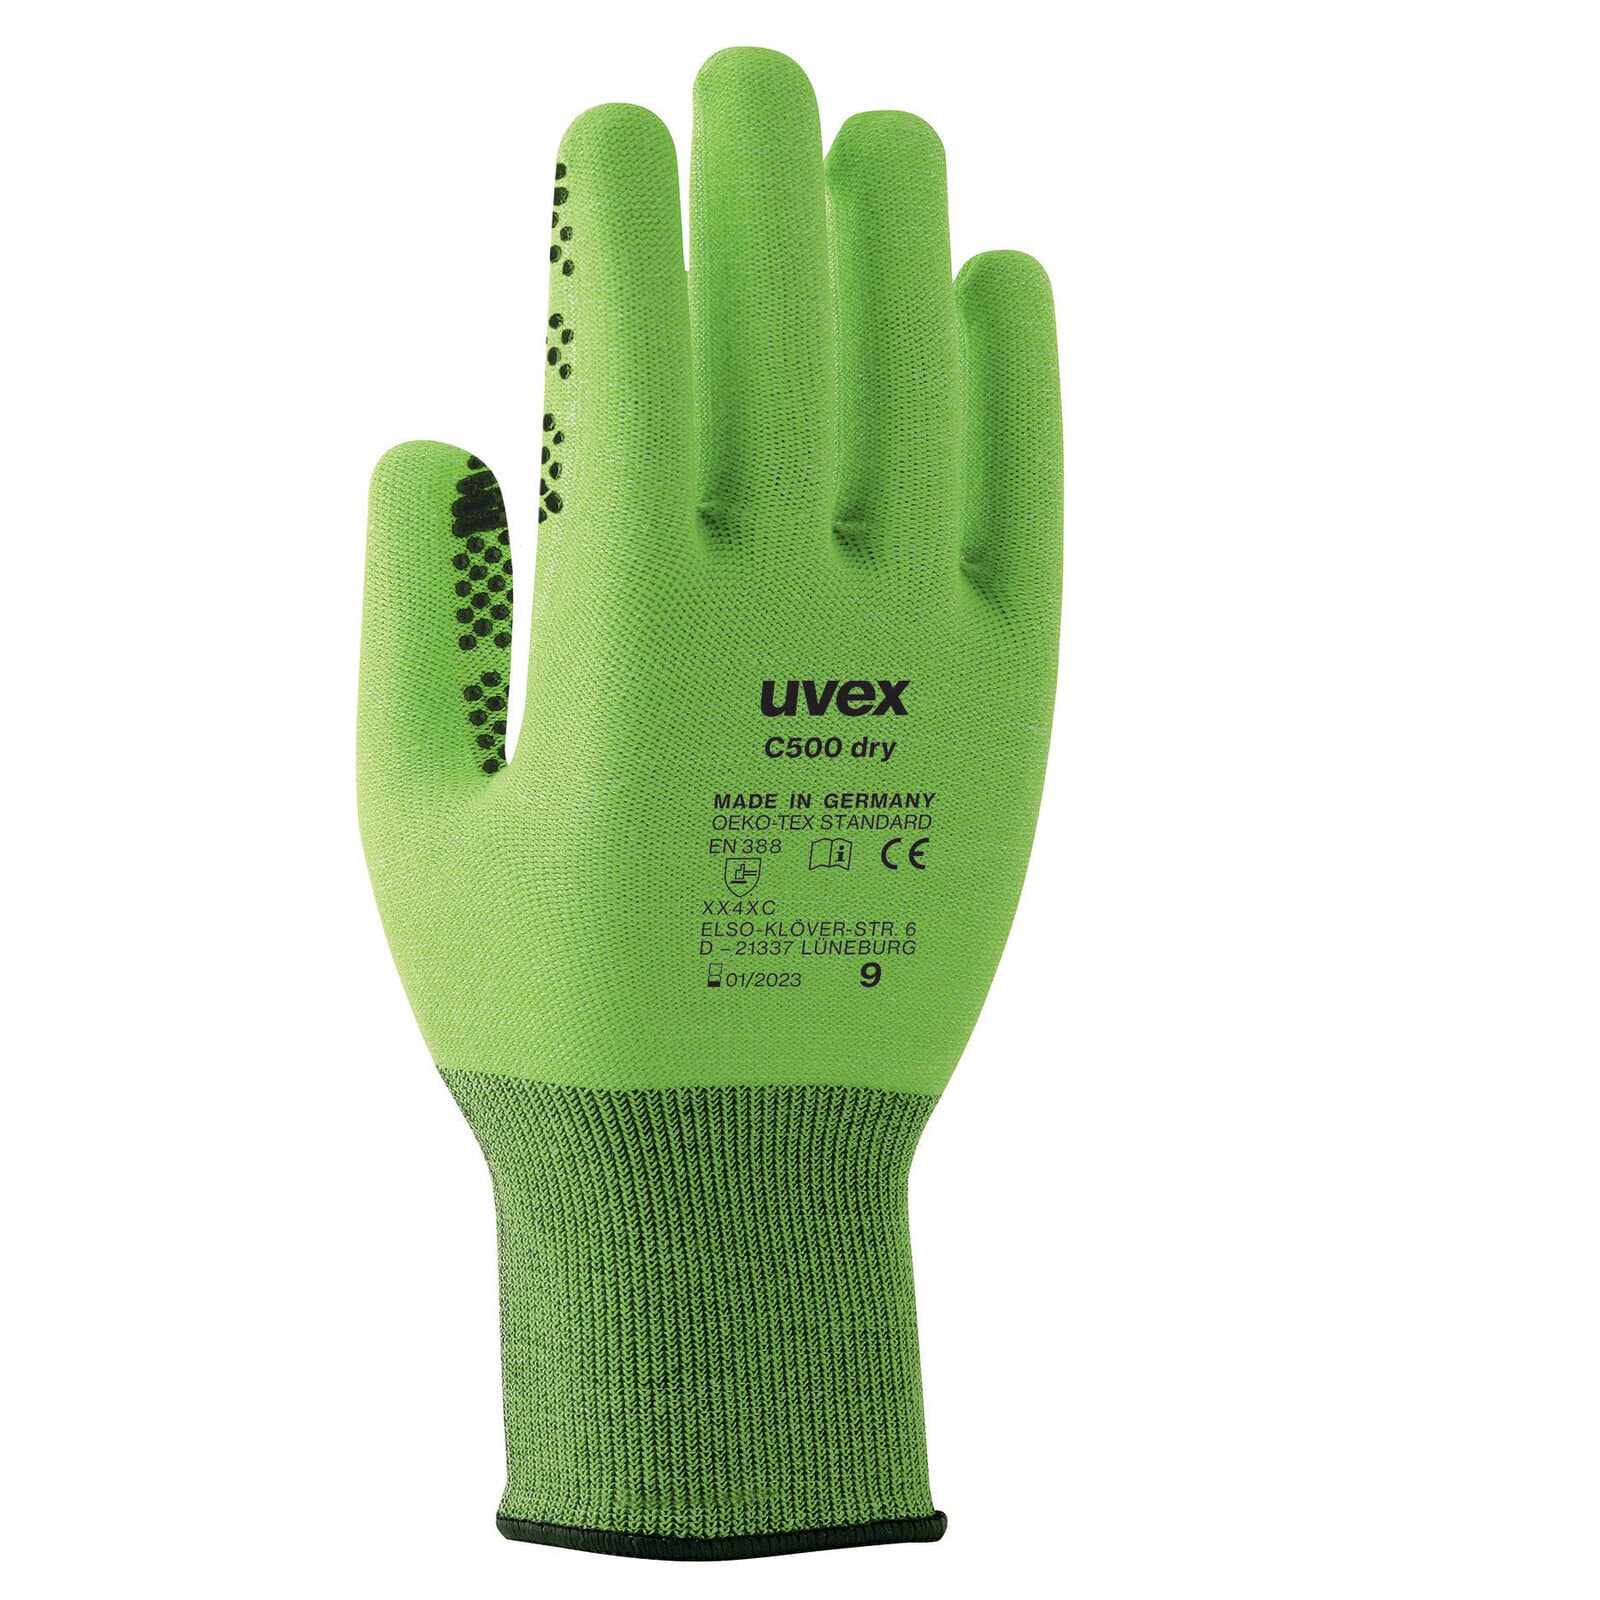 UVEX Arbeitsschutz C500 dry - Green - EUE - Adult - Adult - Unisex - 1 pc(s)